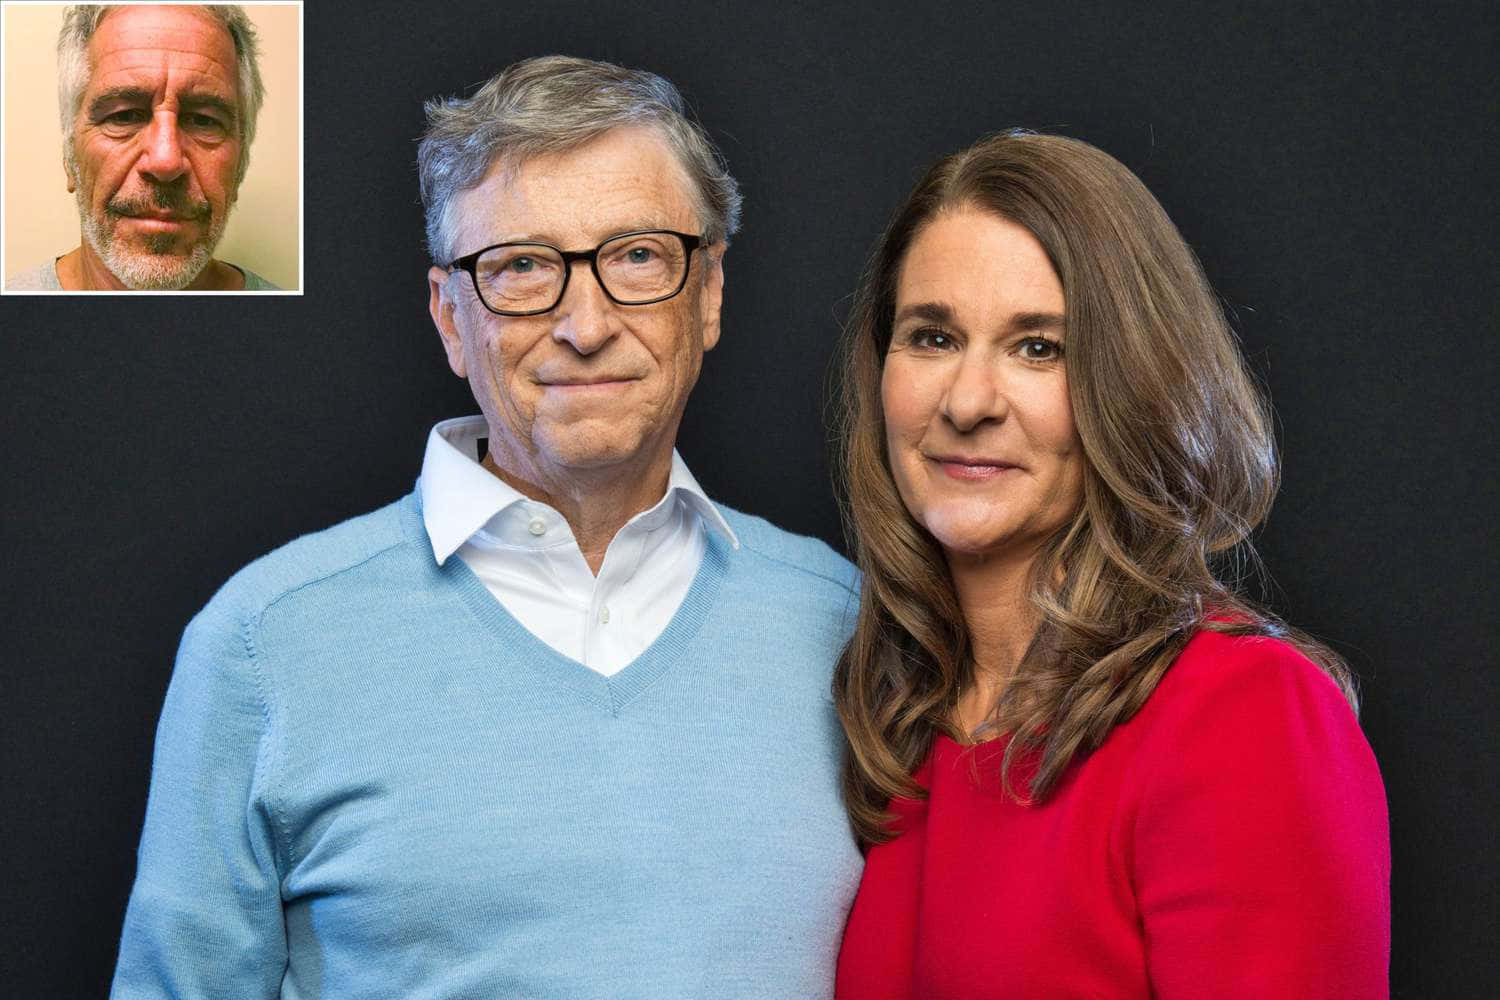 Bill Gates and Jeffrey Epstein share an awkward moment